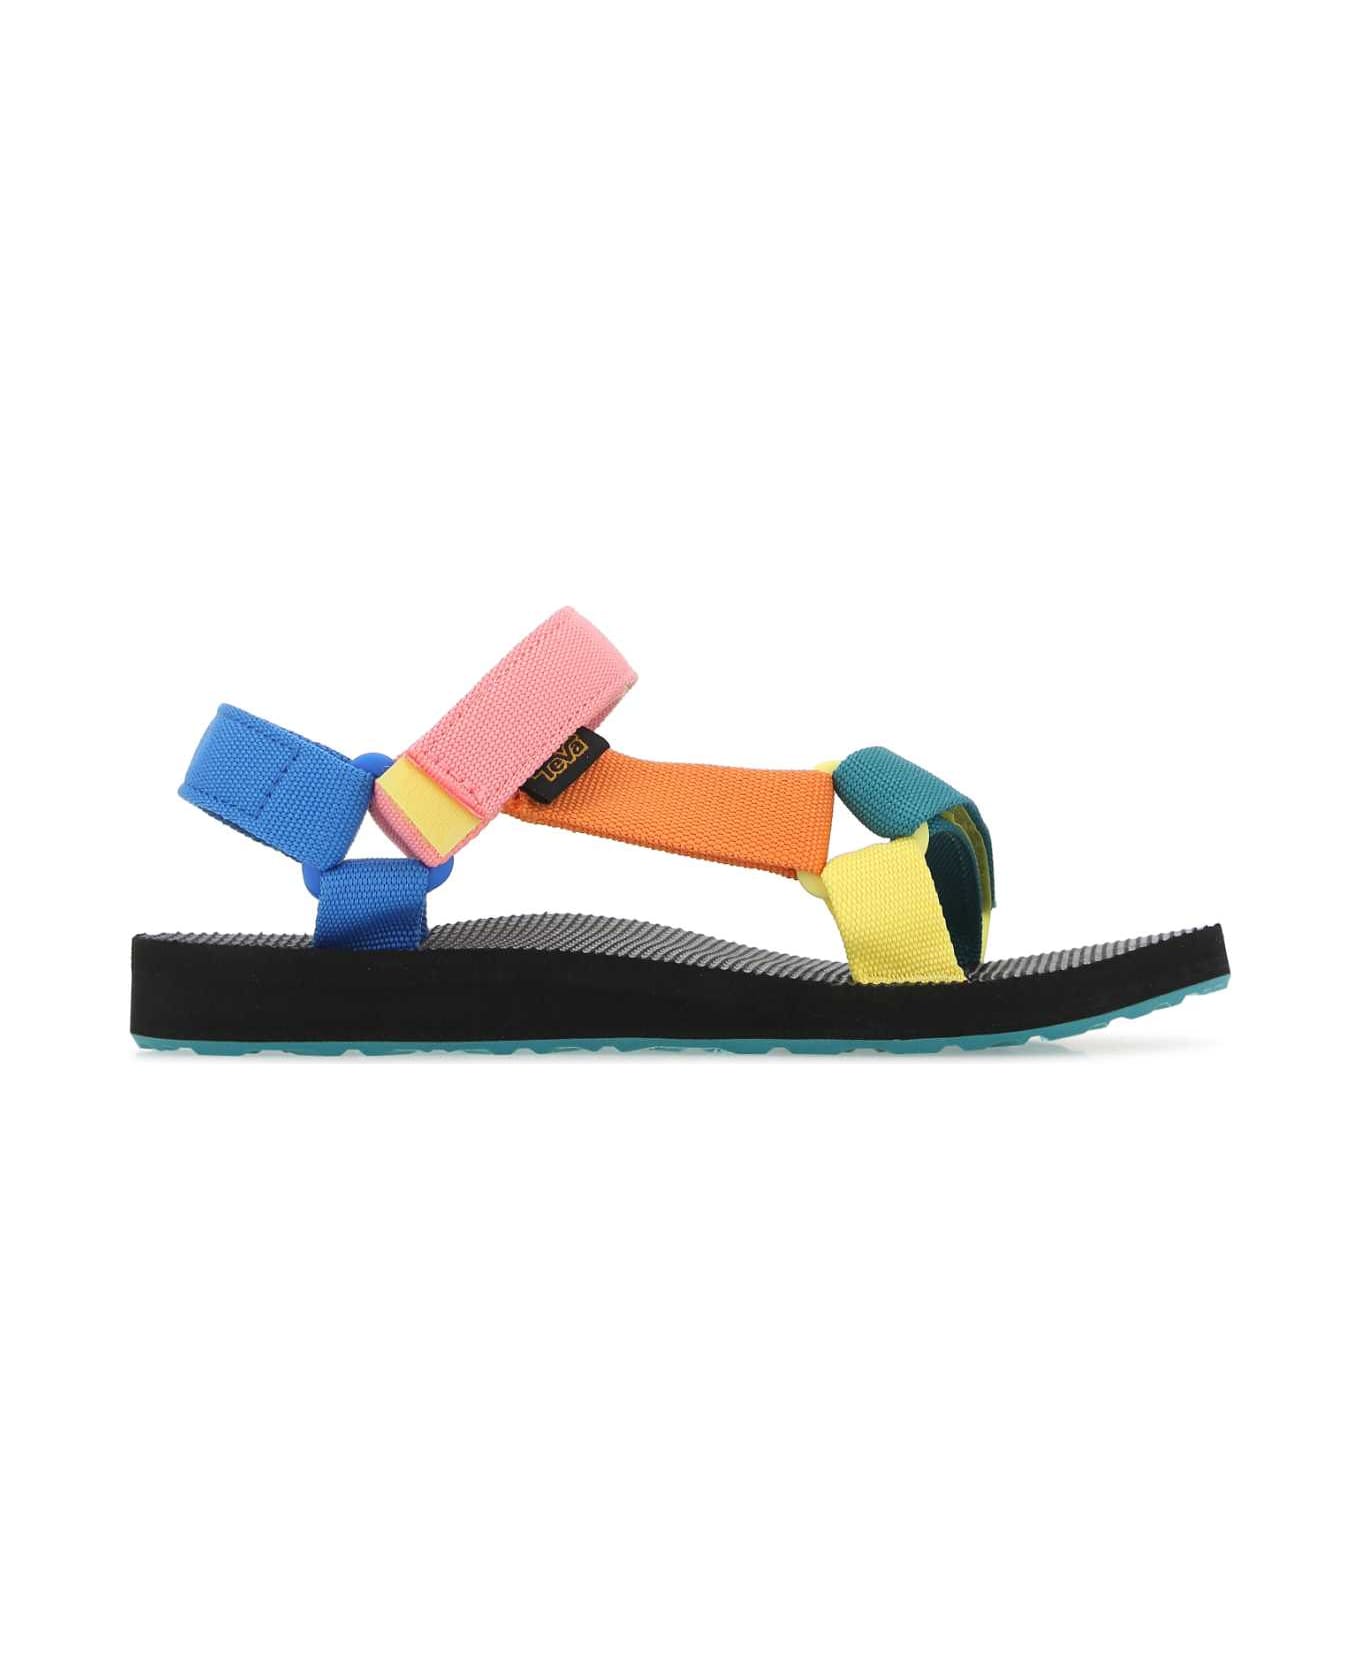 Teva Multicolor Polyester Original Universal Sandals - SMU